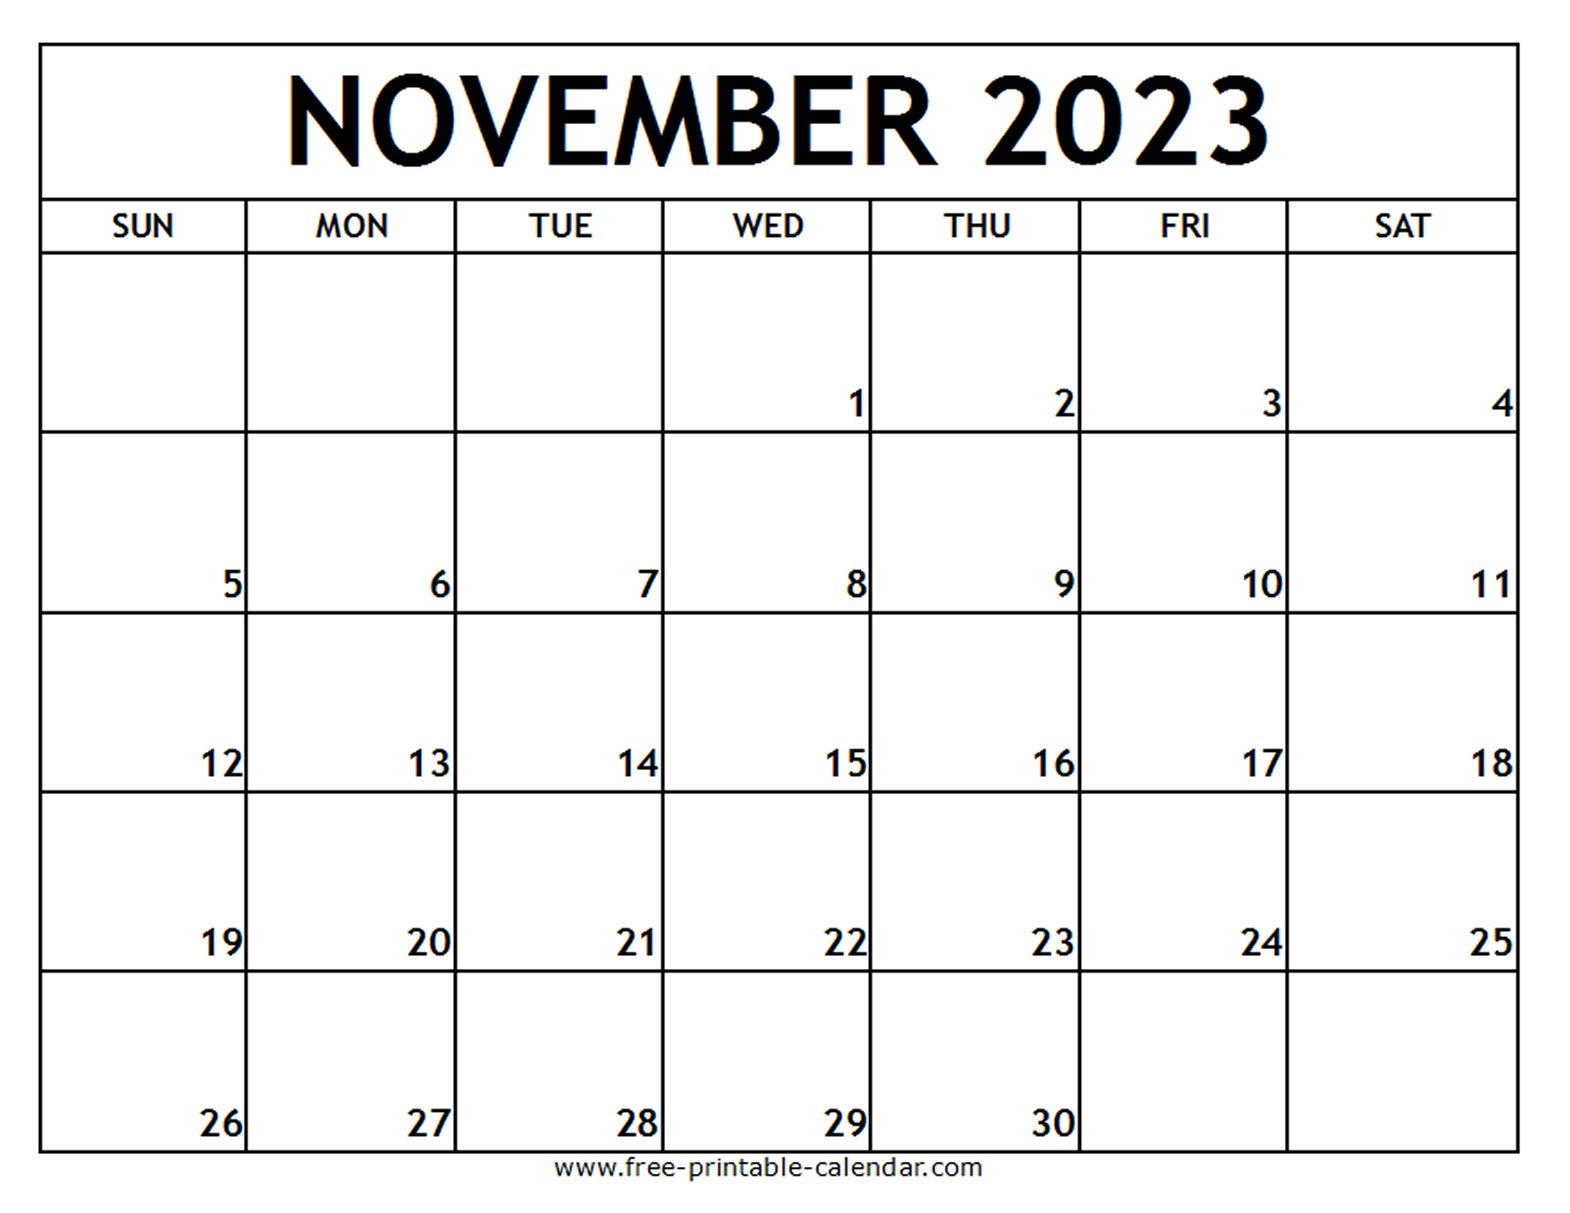 november-2023-calendar-free-printable-get-latest-map-update